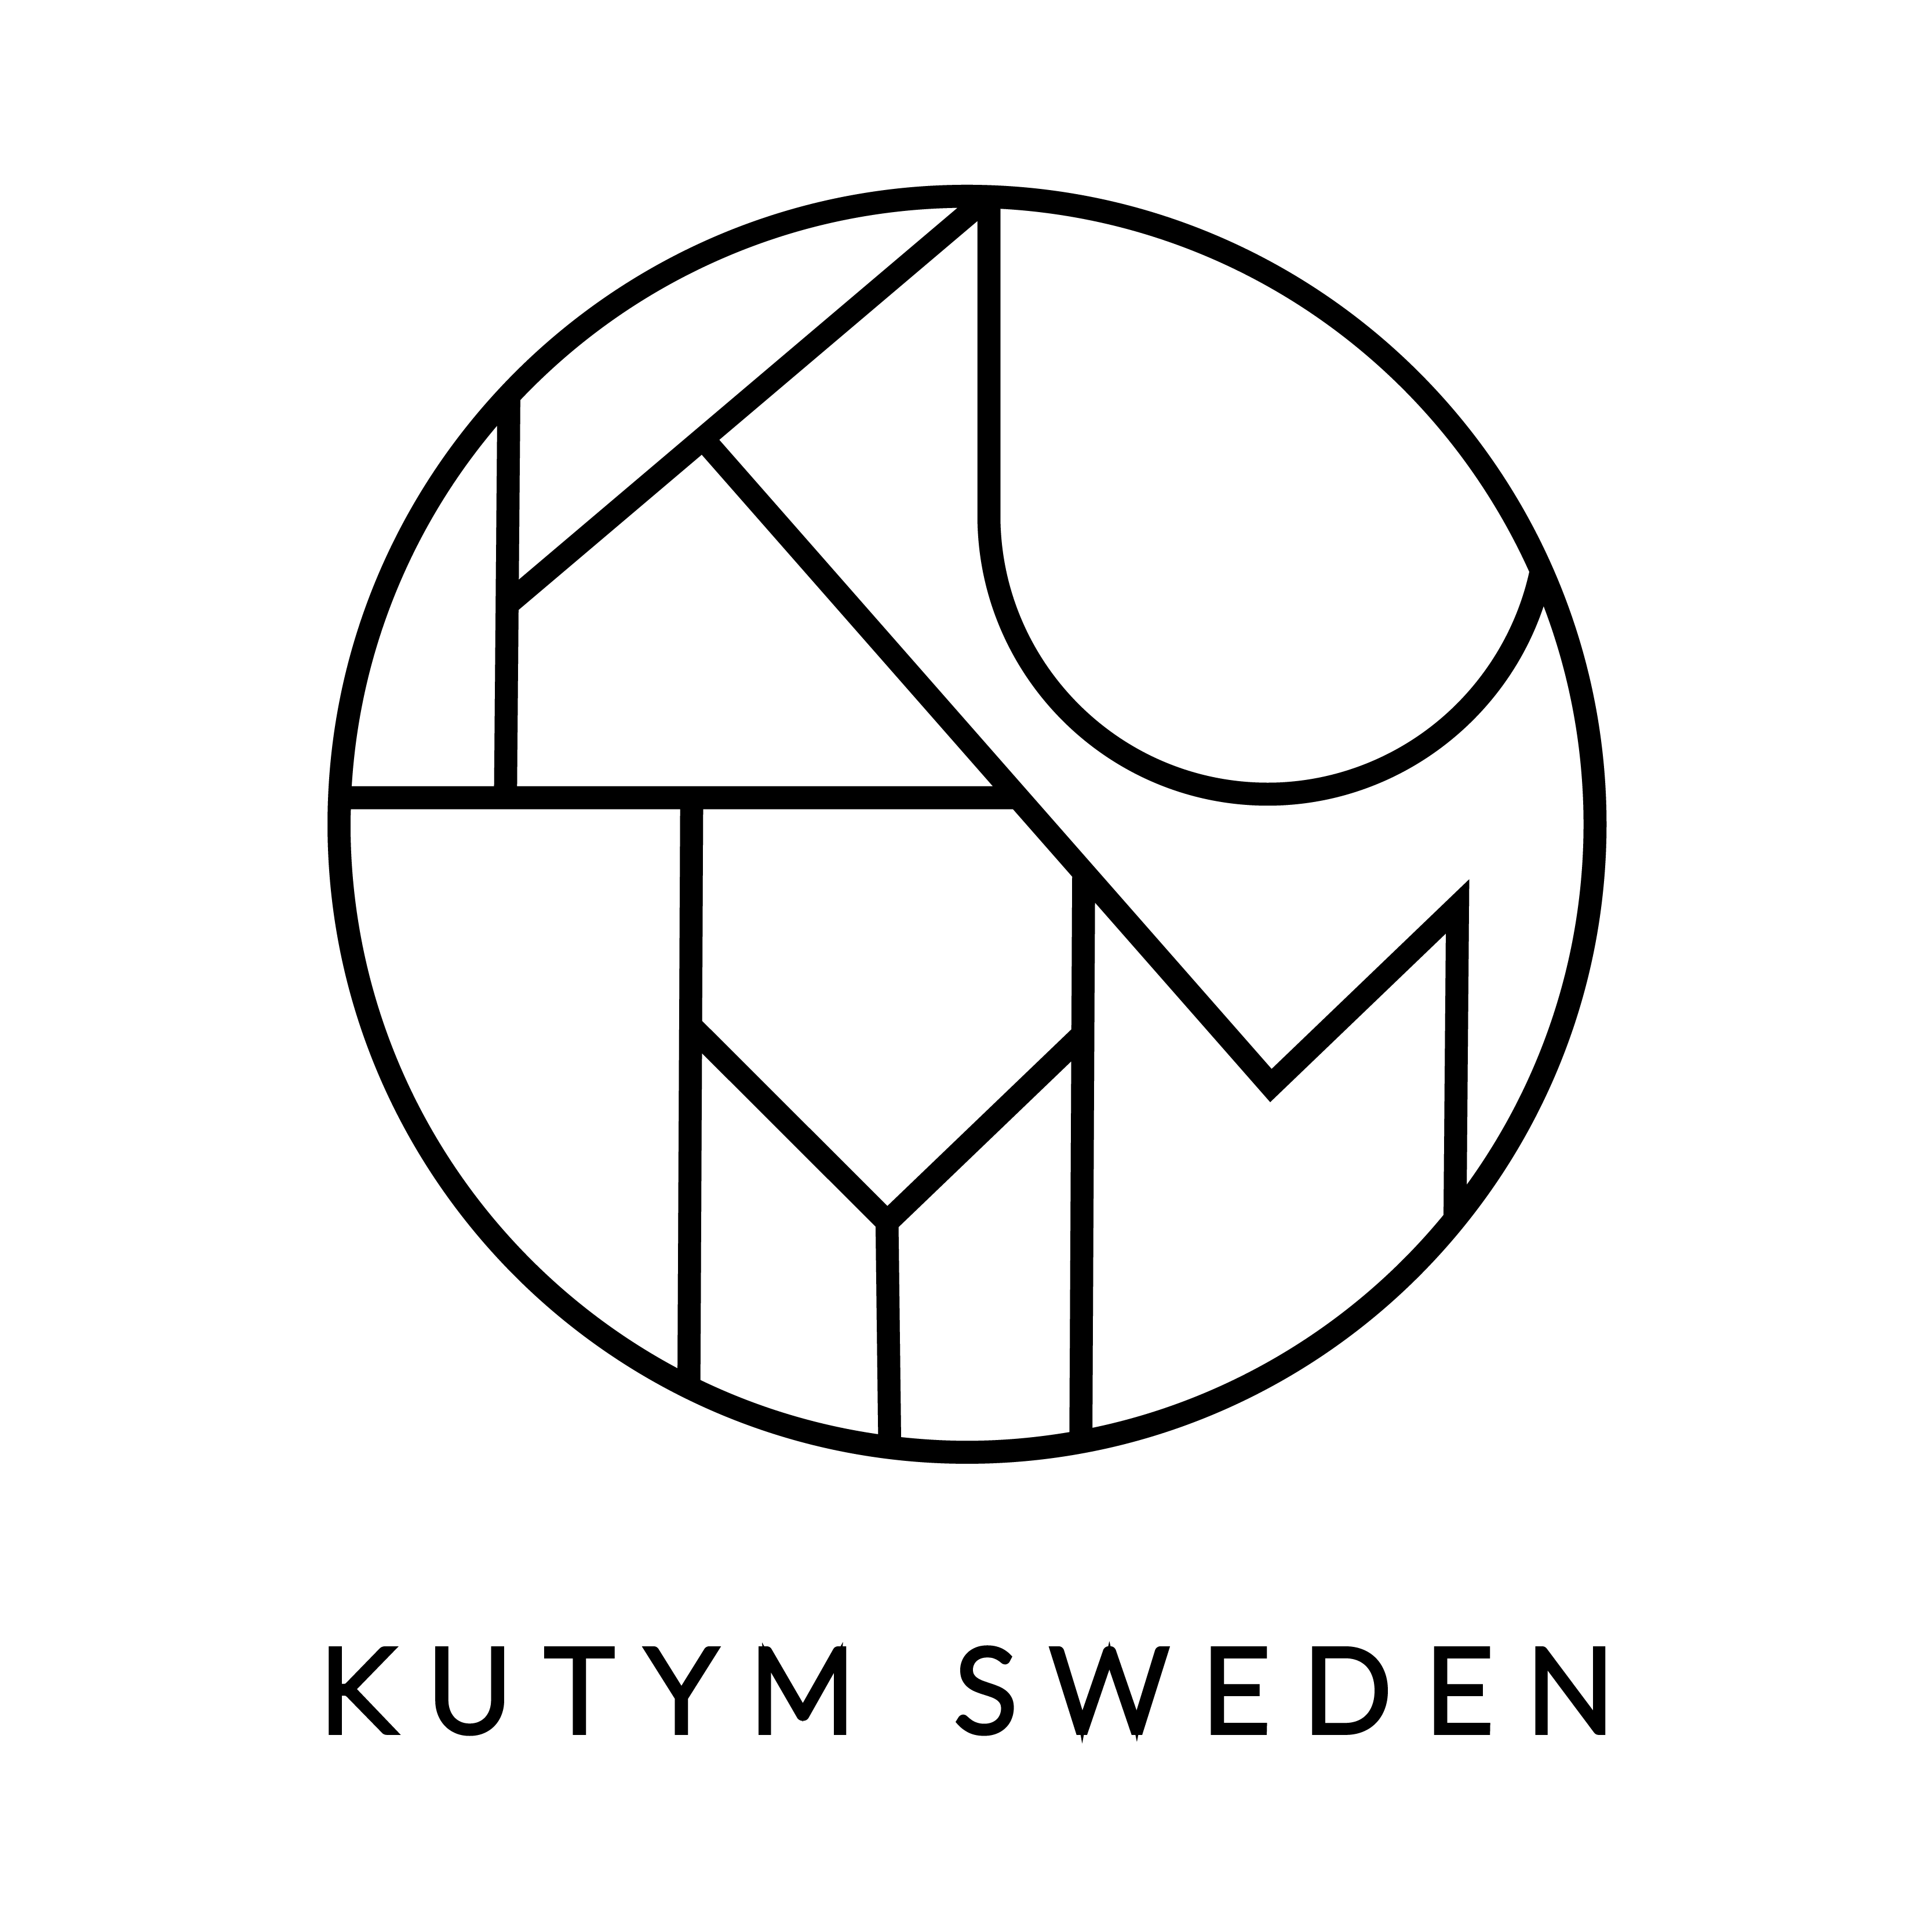 Kutym_logo_textundersymbol